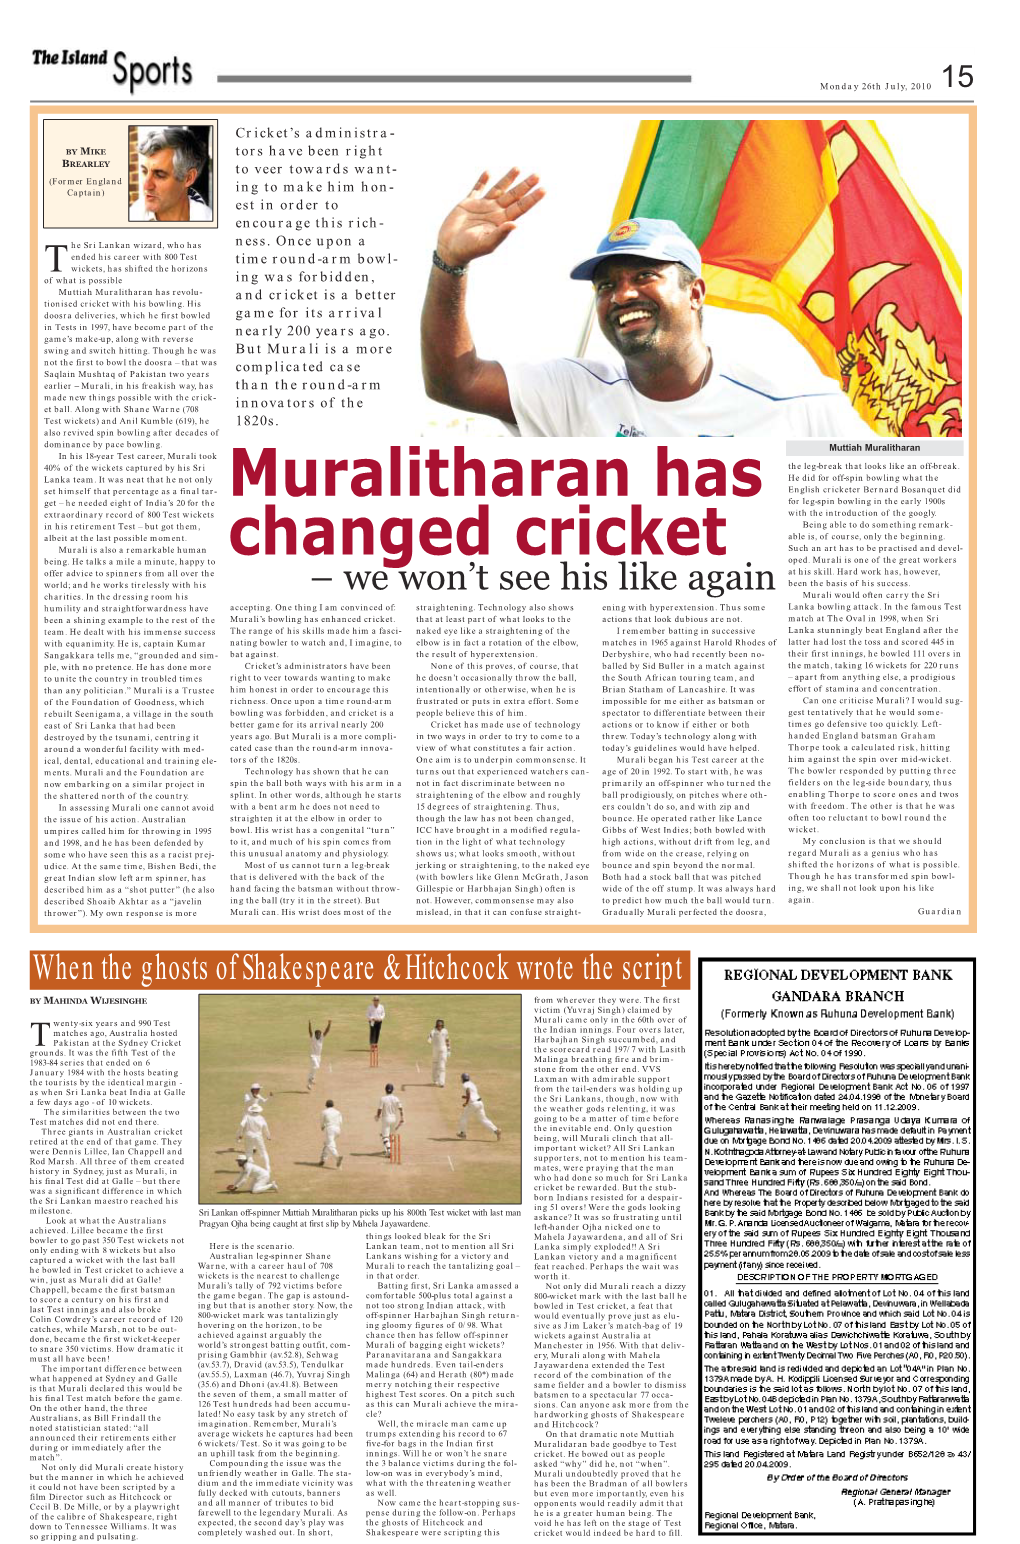 Muralitharan Has Changed Cricket